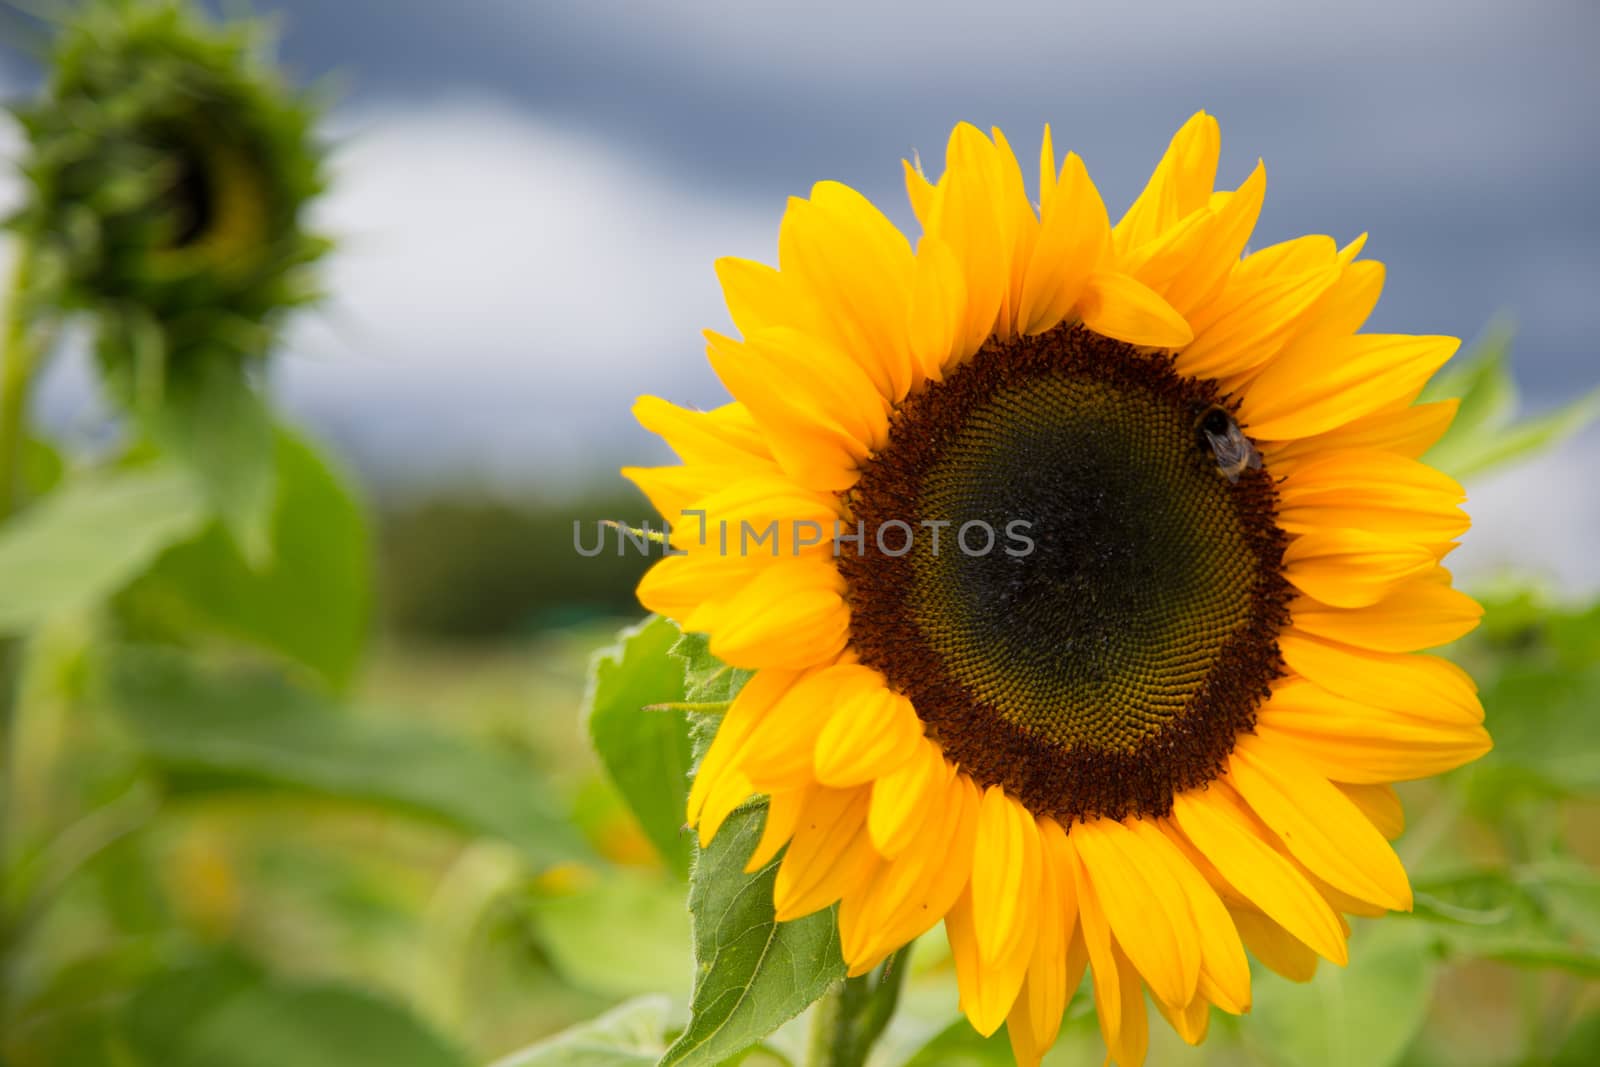 beatuful sunflowers on the field